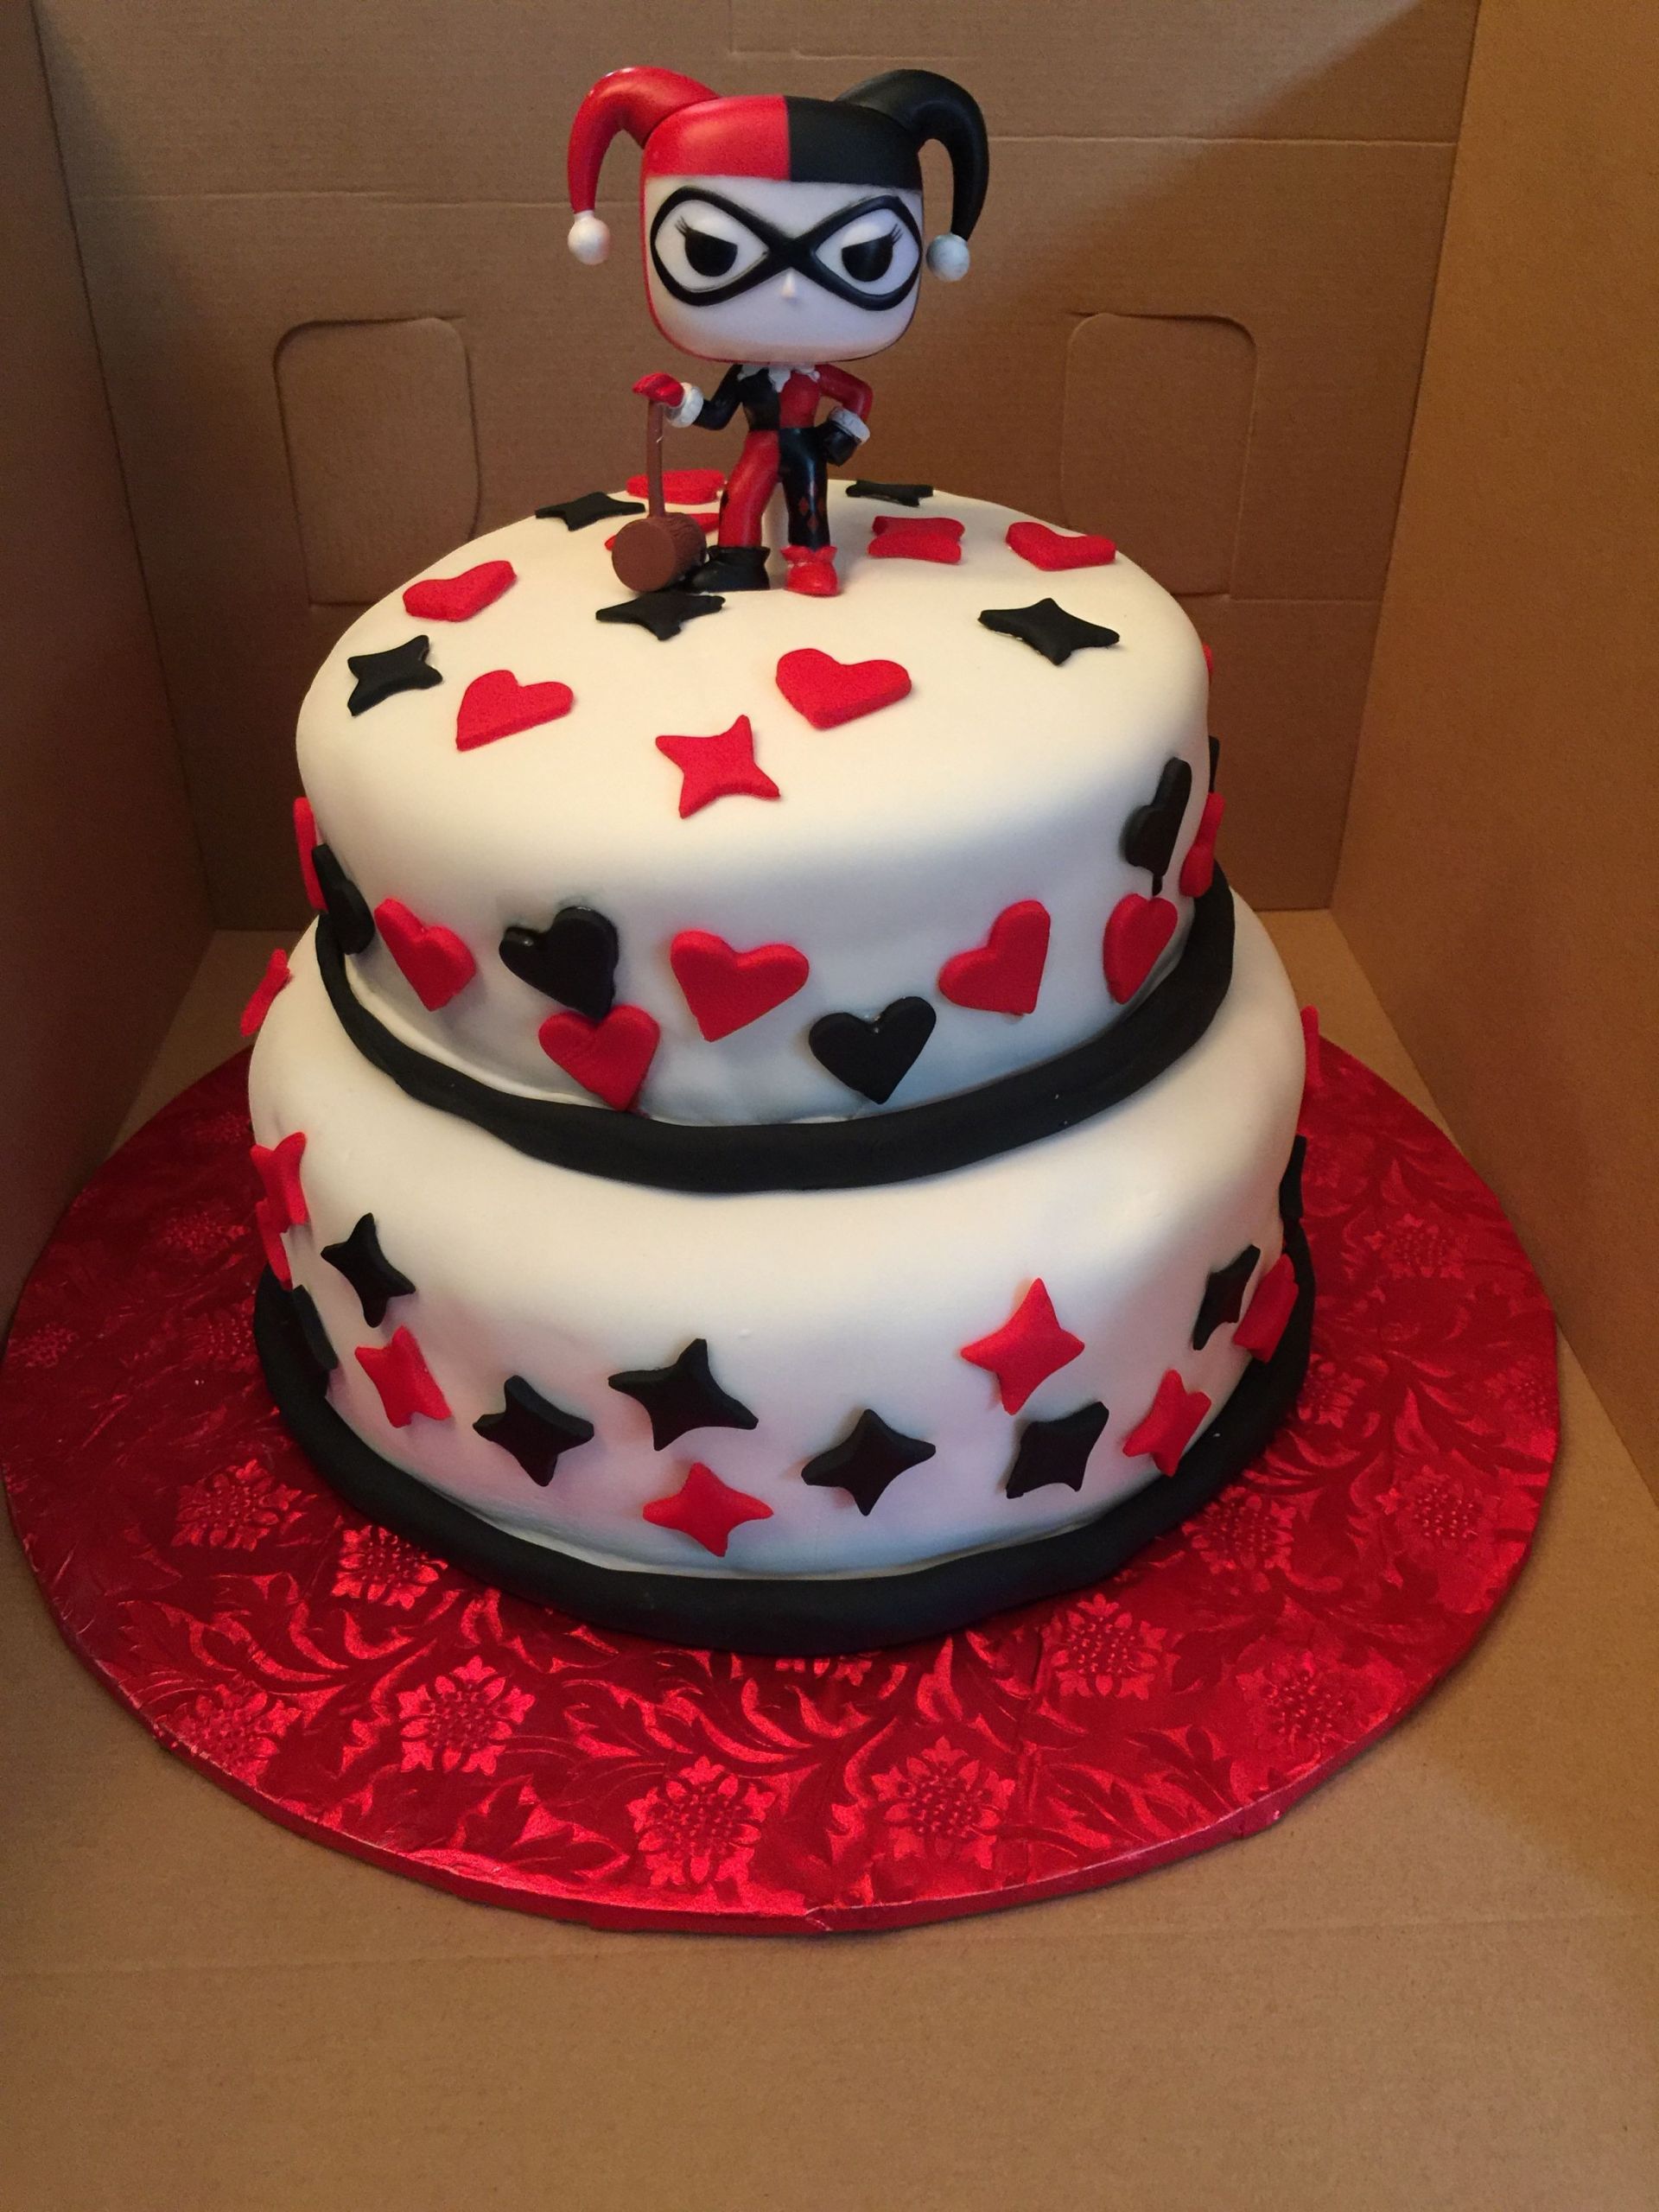 The 15 Best Ideas for Harley Quinn Birthday Cake